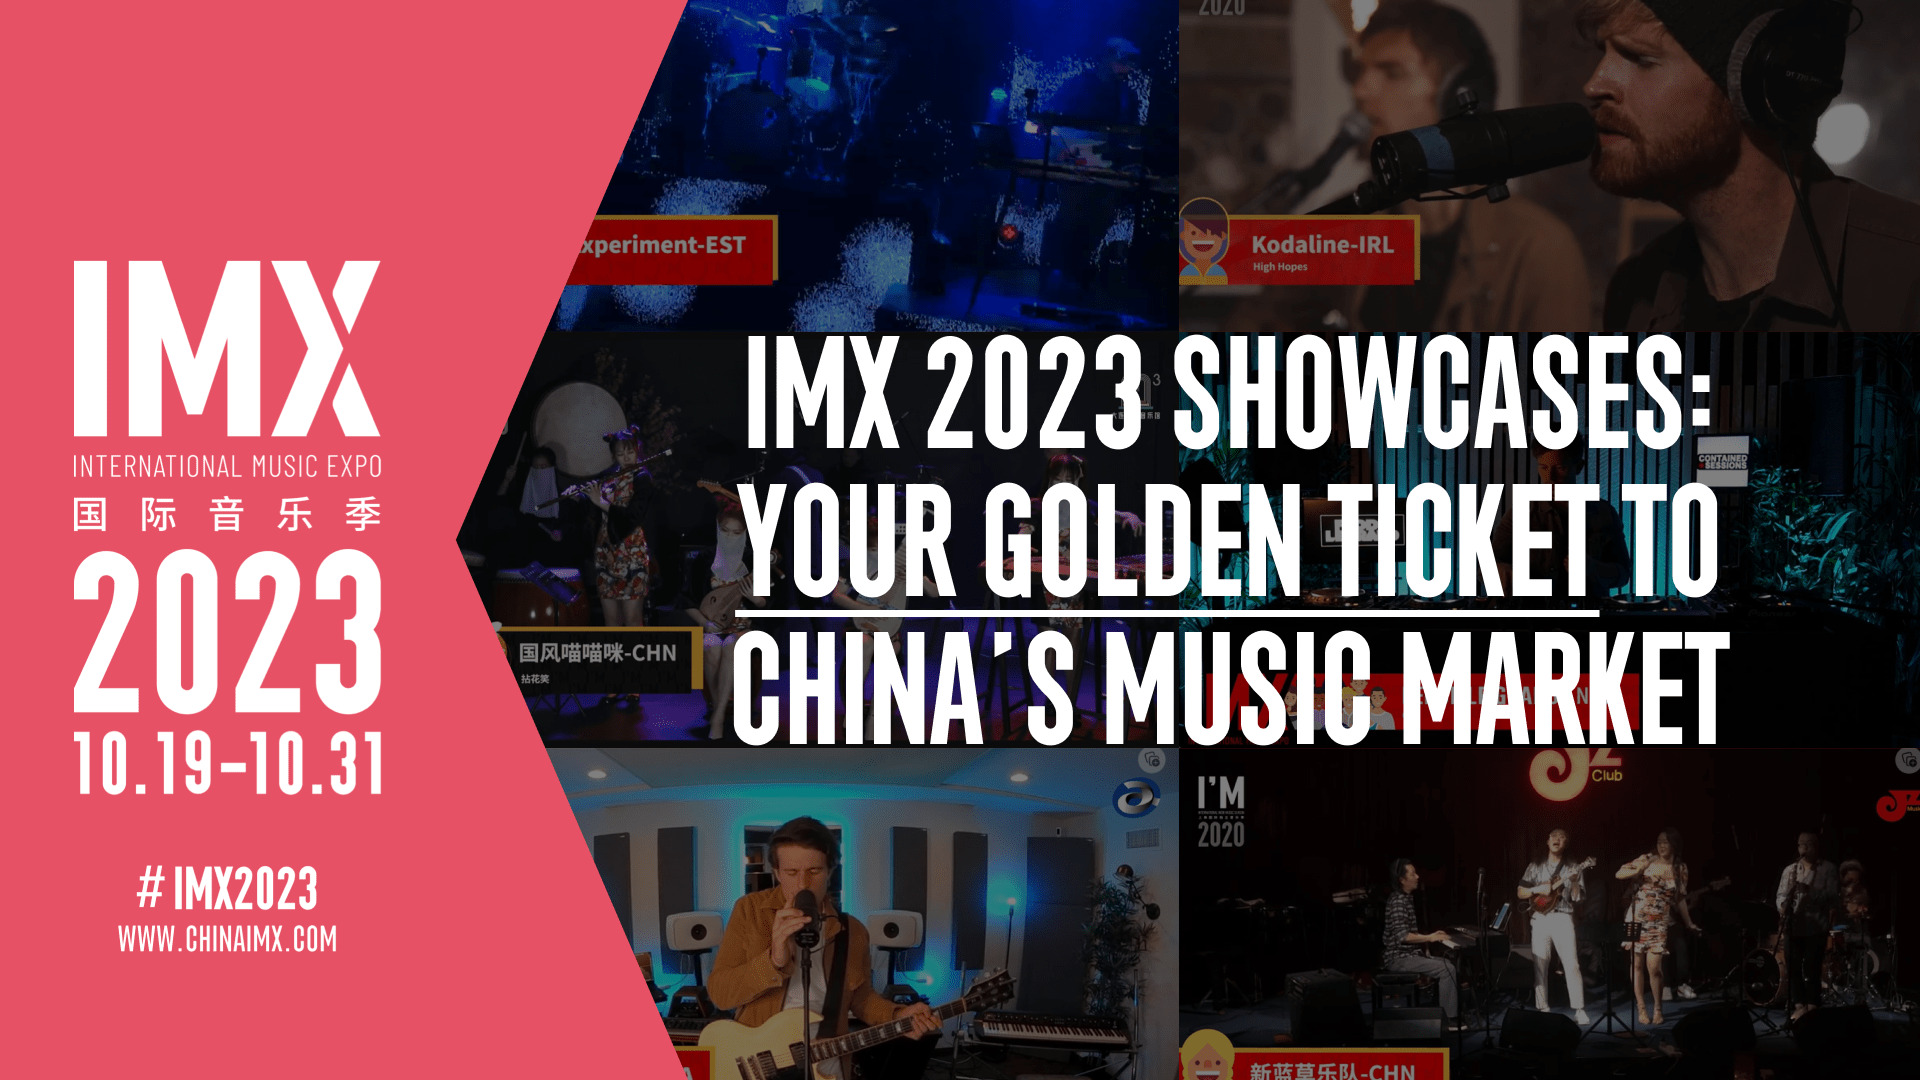 IMX Showcase Golden Ticket to China's Music Market